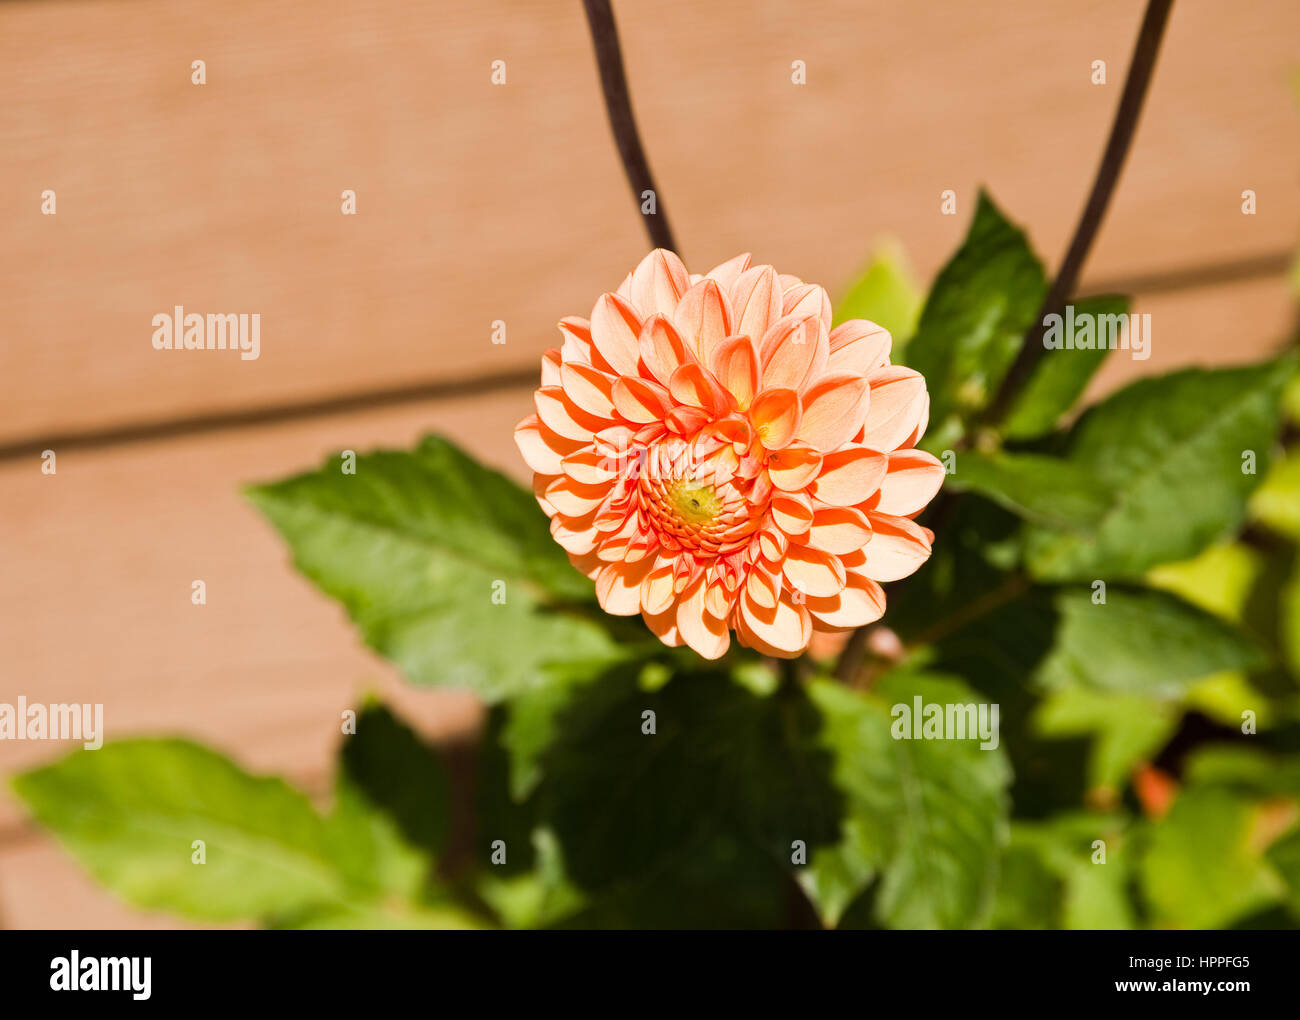 Sunlit flower in a garden Stock Photo